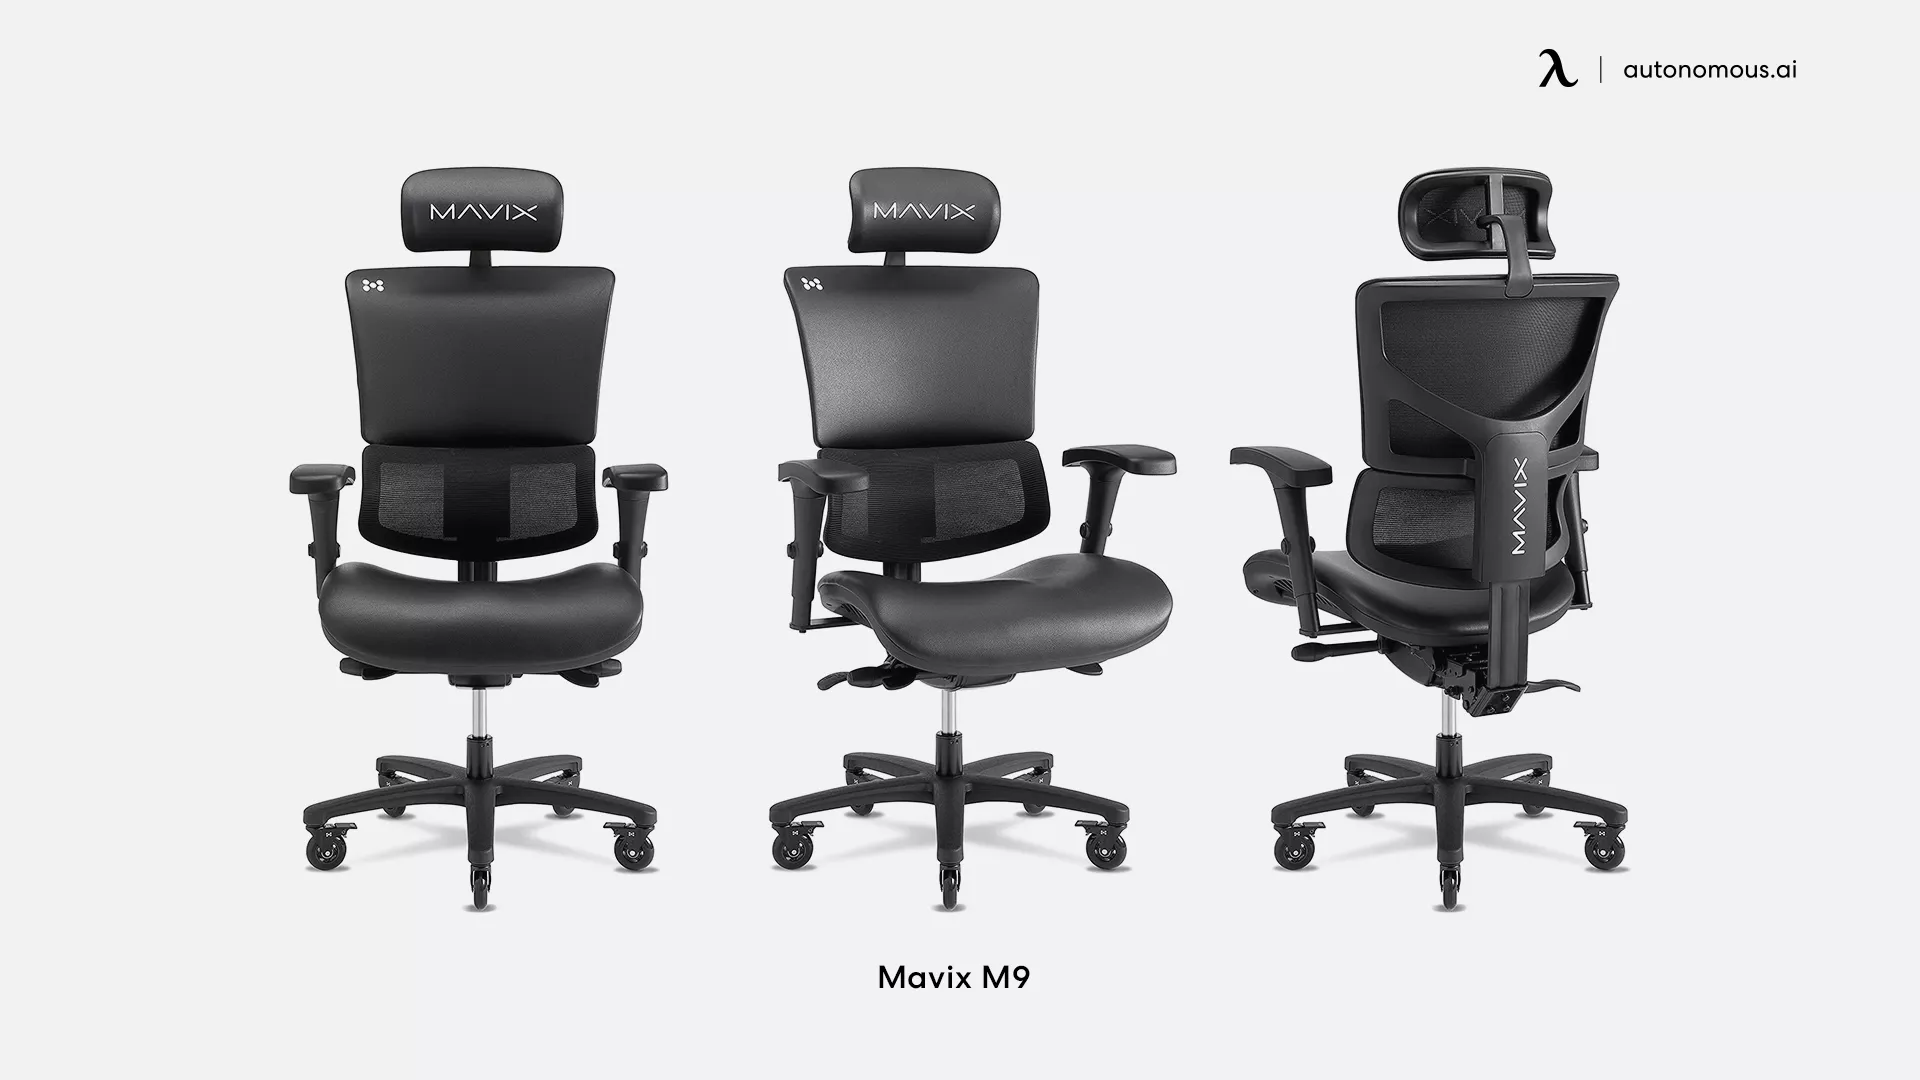 Mavix M9 black gaming chair